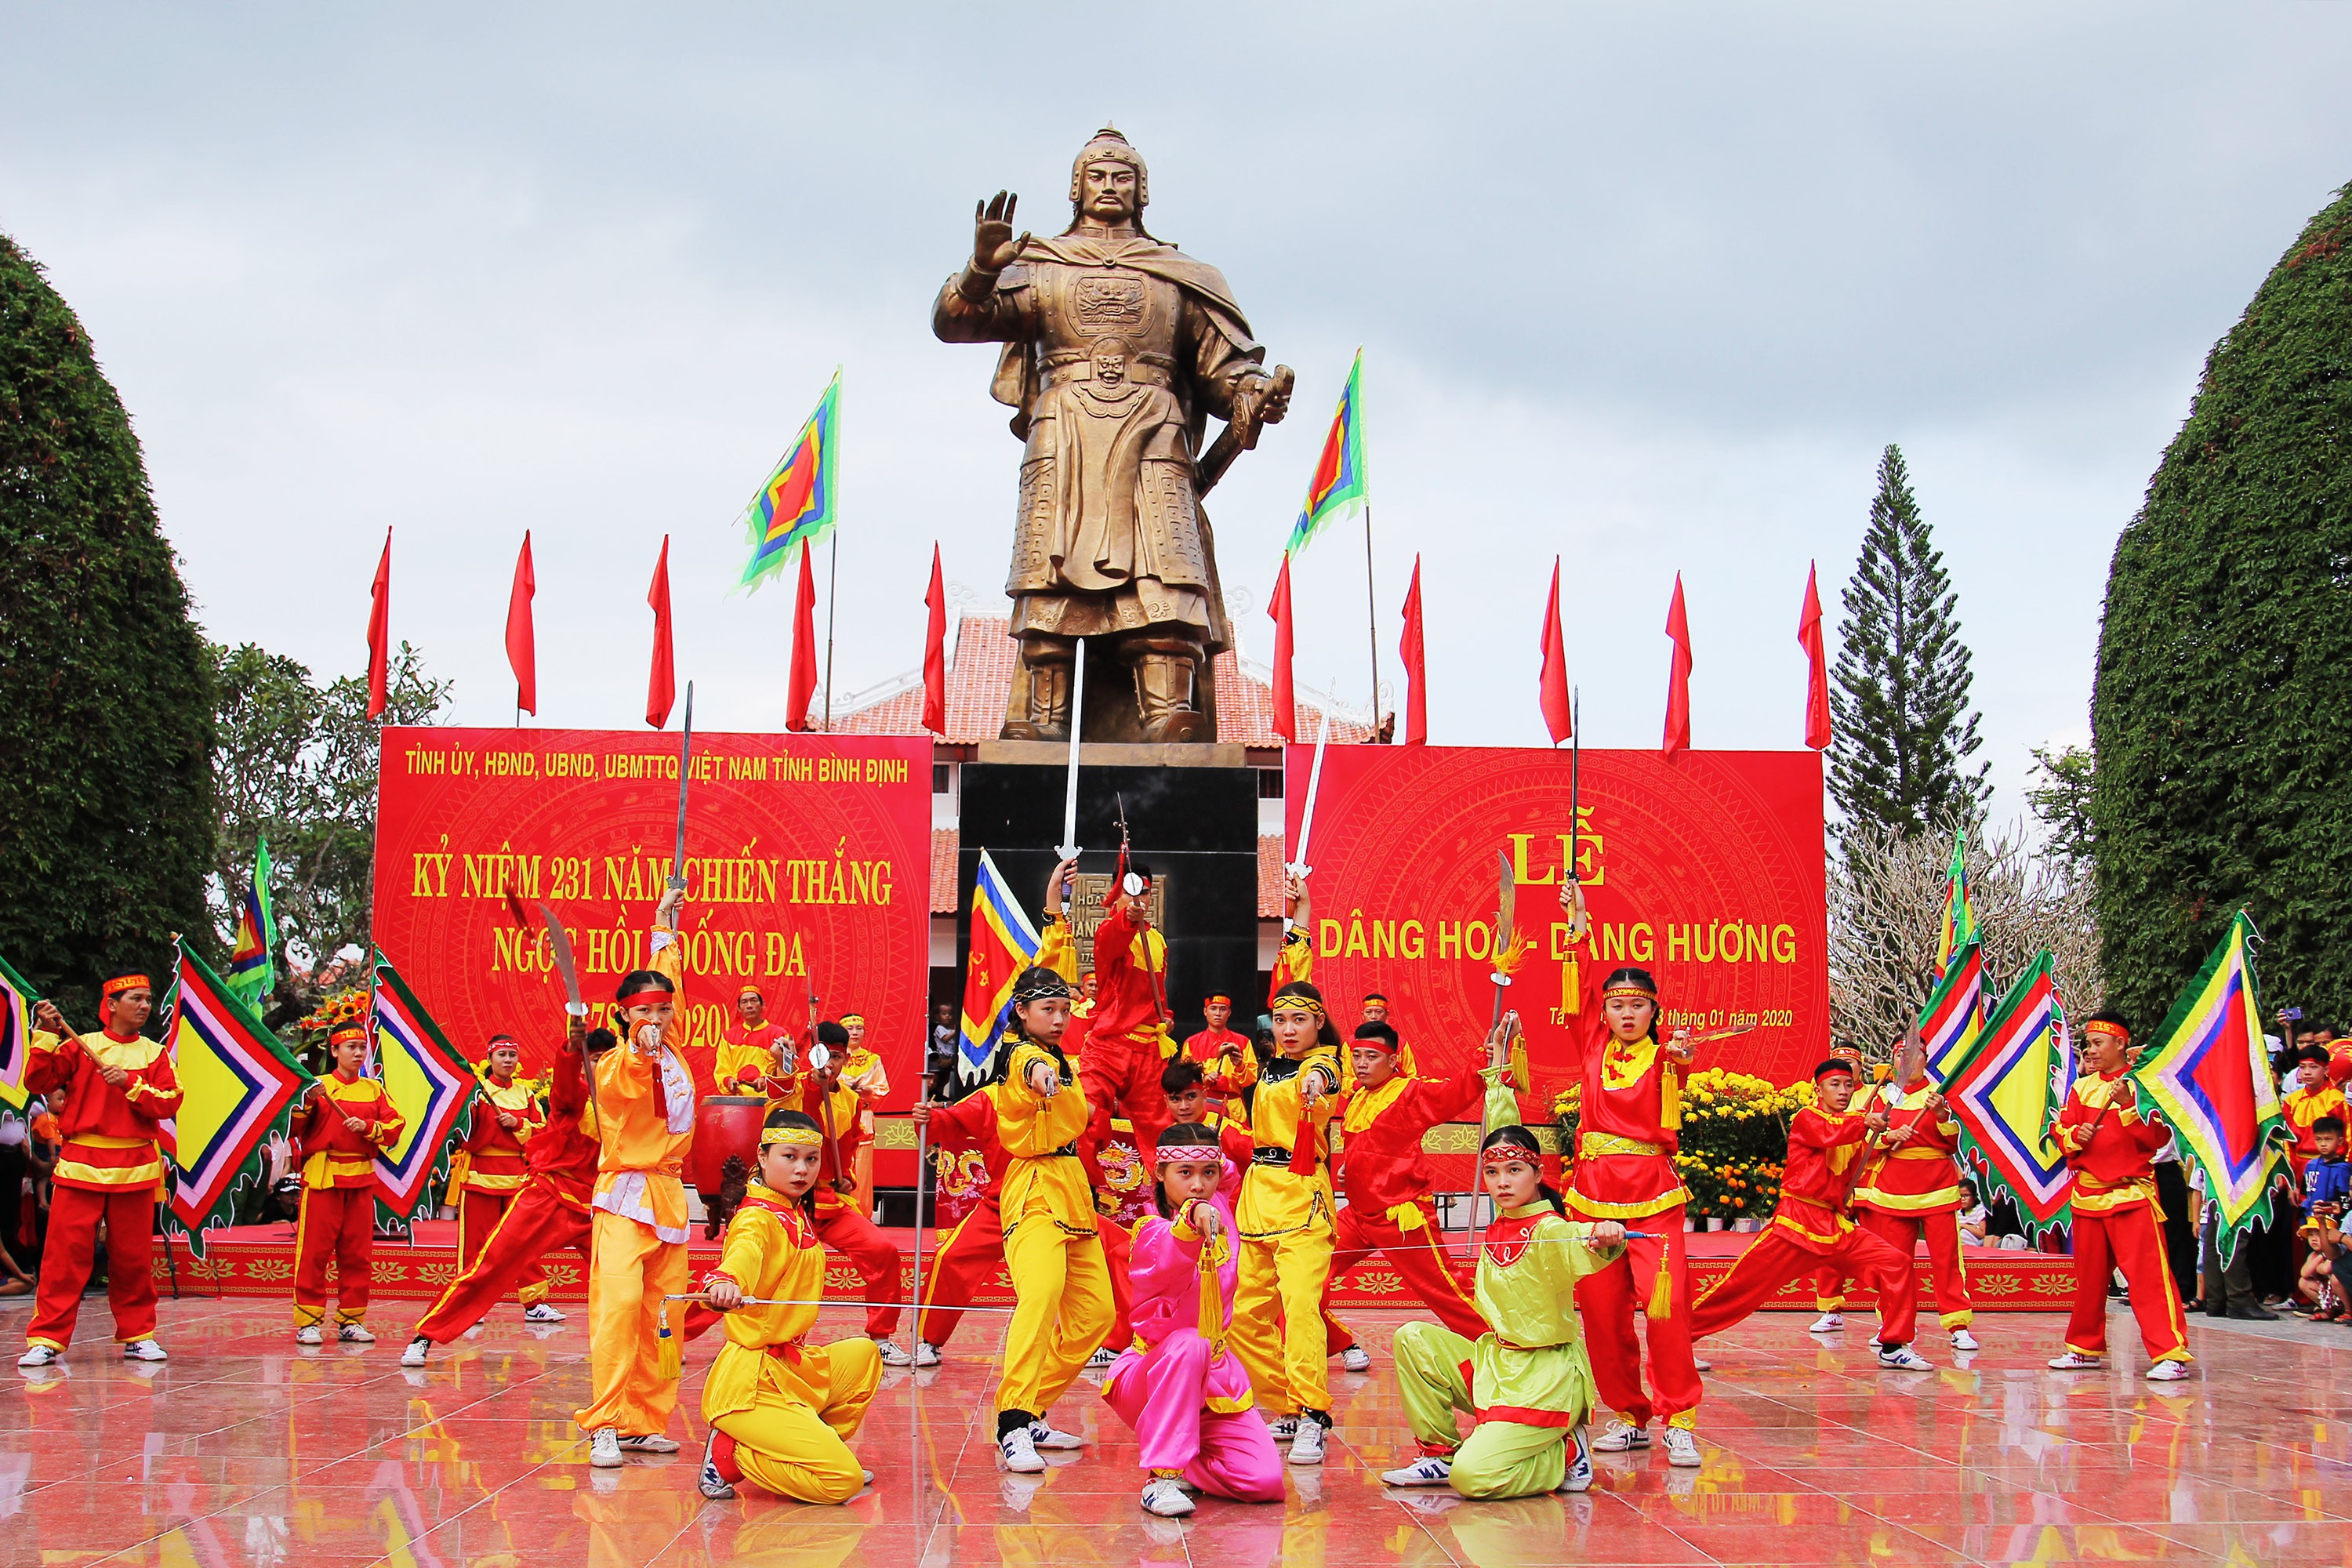 该音乐节庆祝Ngoc Hoi-Dong Da胜利234年（1789年-2021年）